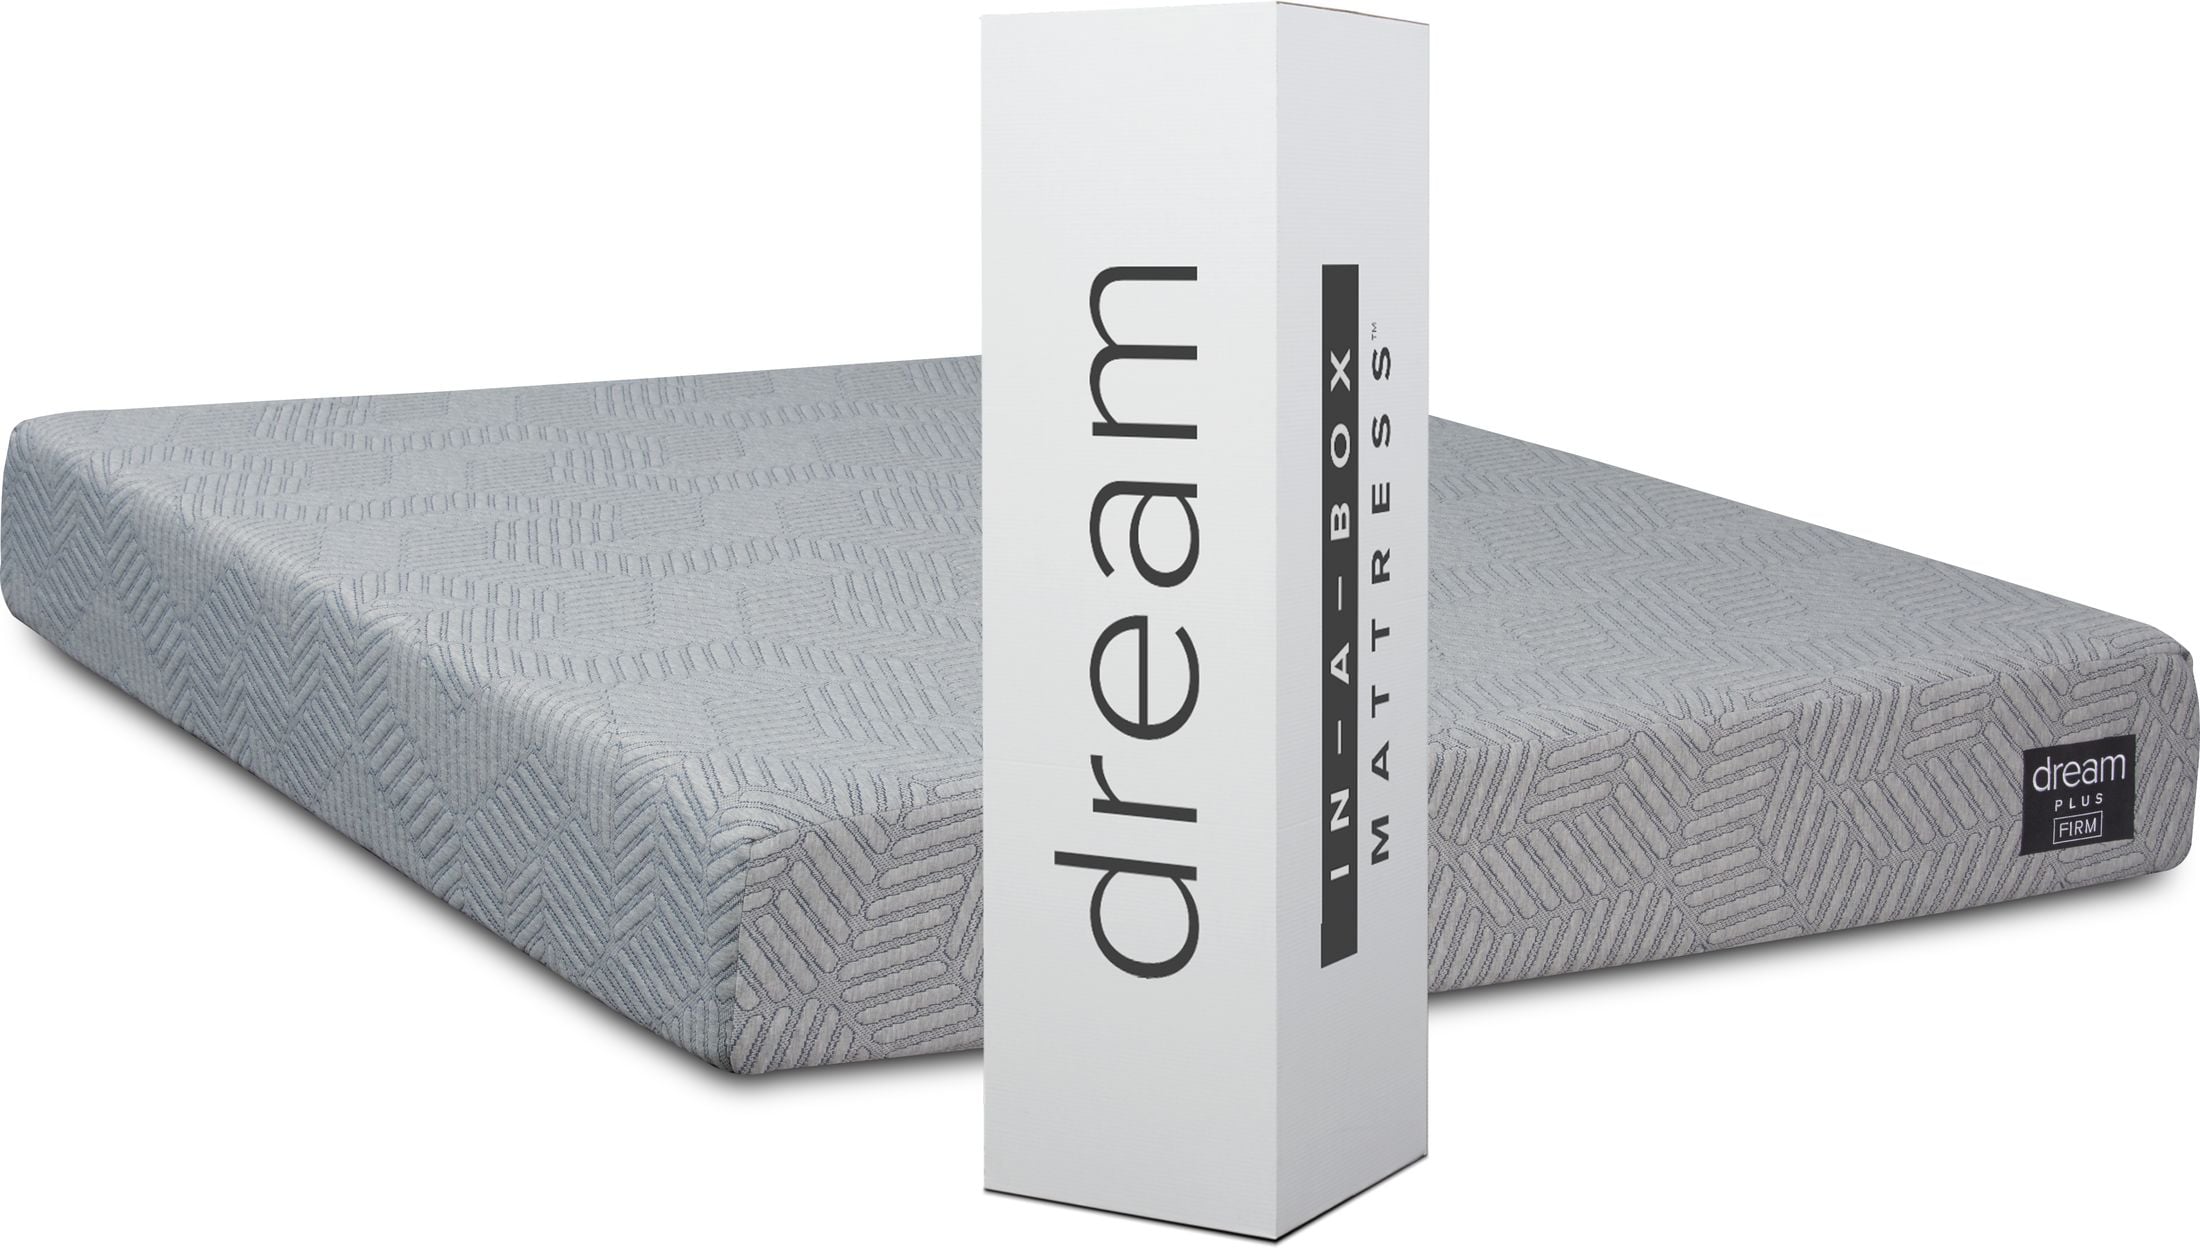 value city dream mattress reviews